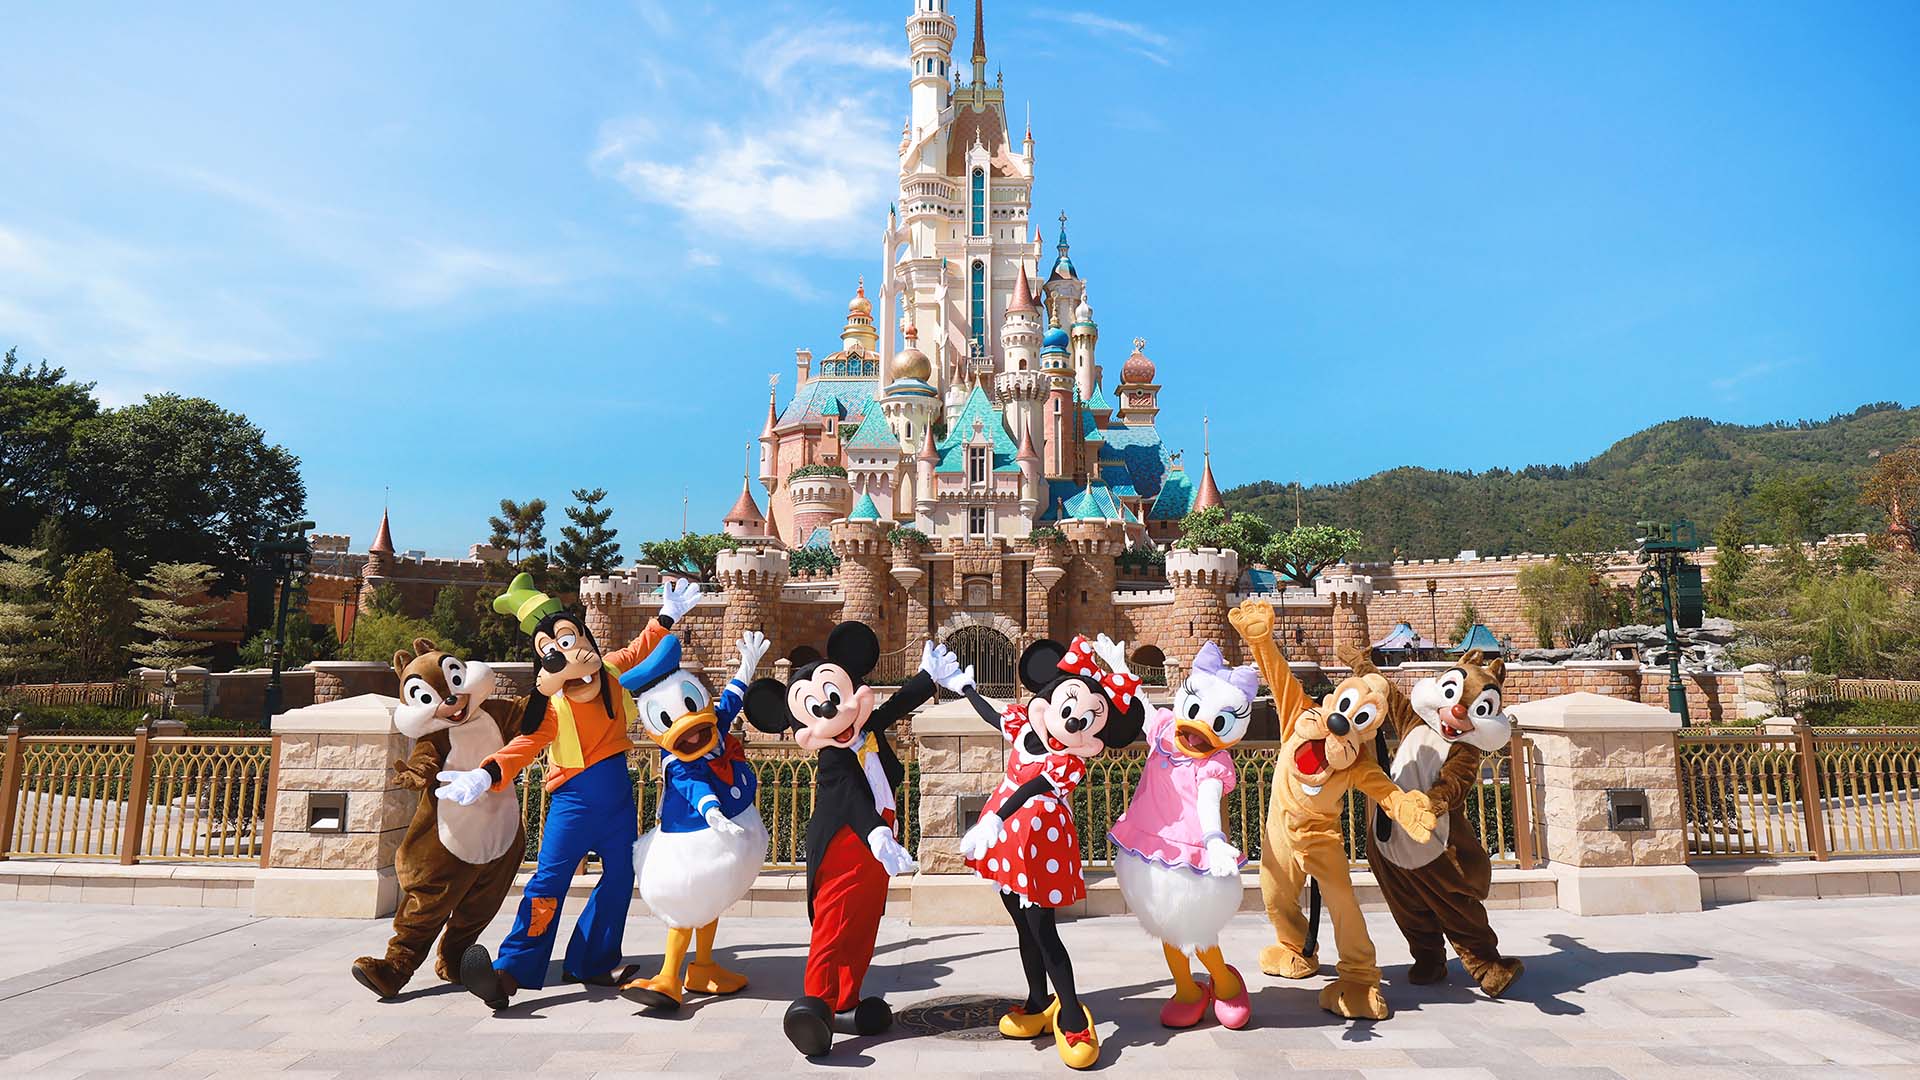 Hong Kong Disneyland: Is It Worth The Money?